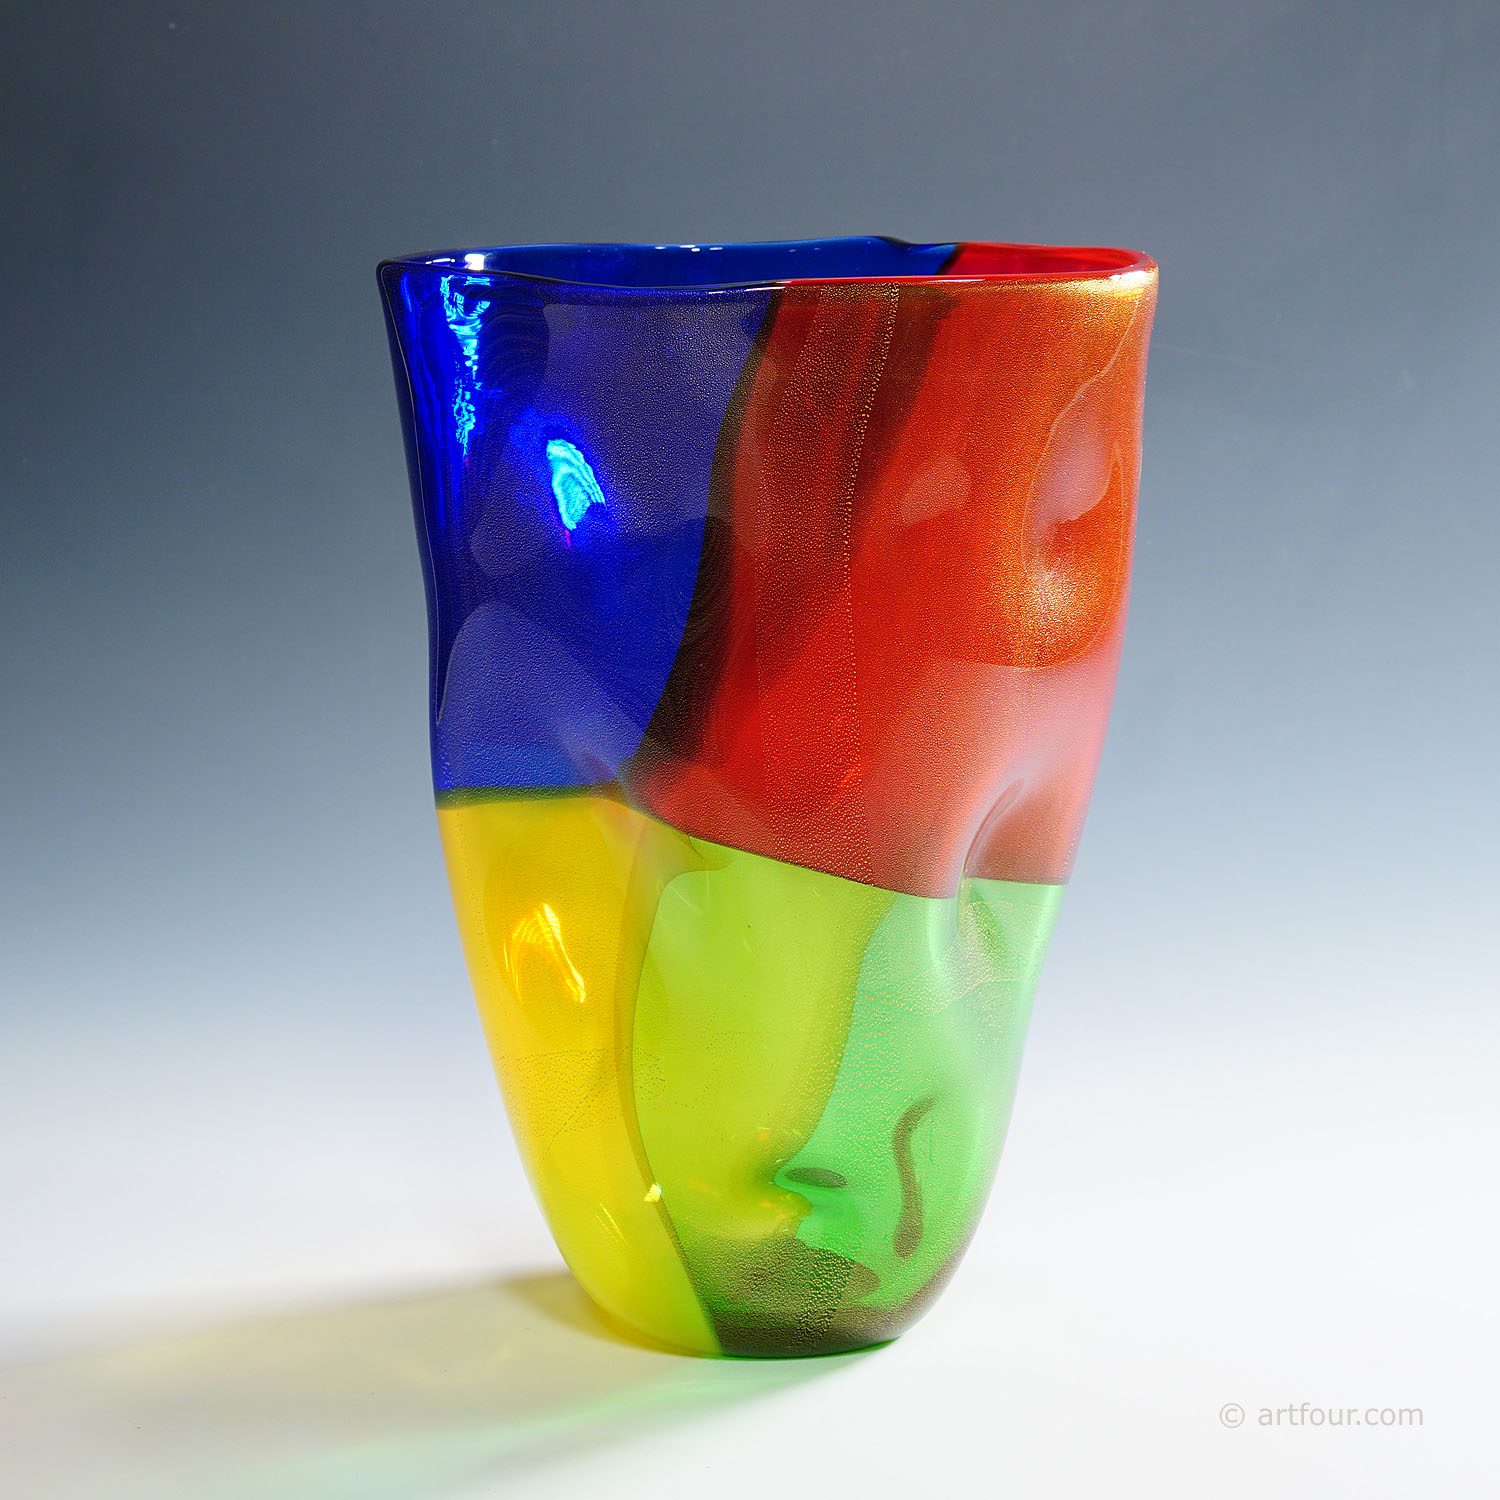 Vintage Art Glass Vase of the 4 Quarti Series by Seguso Viro